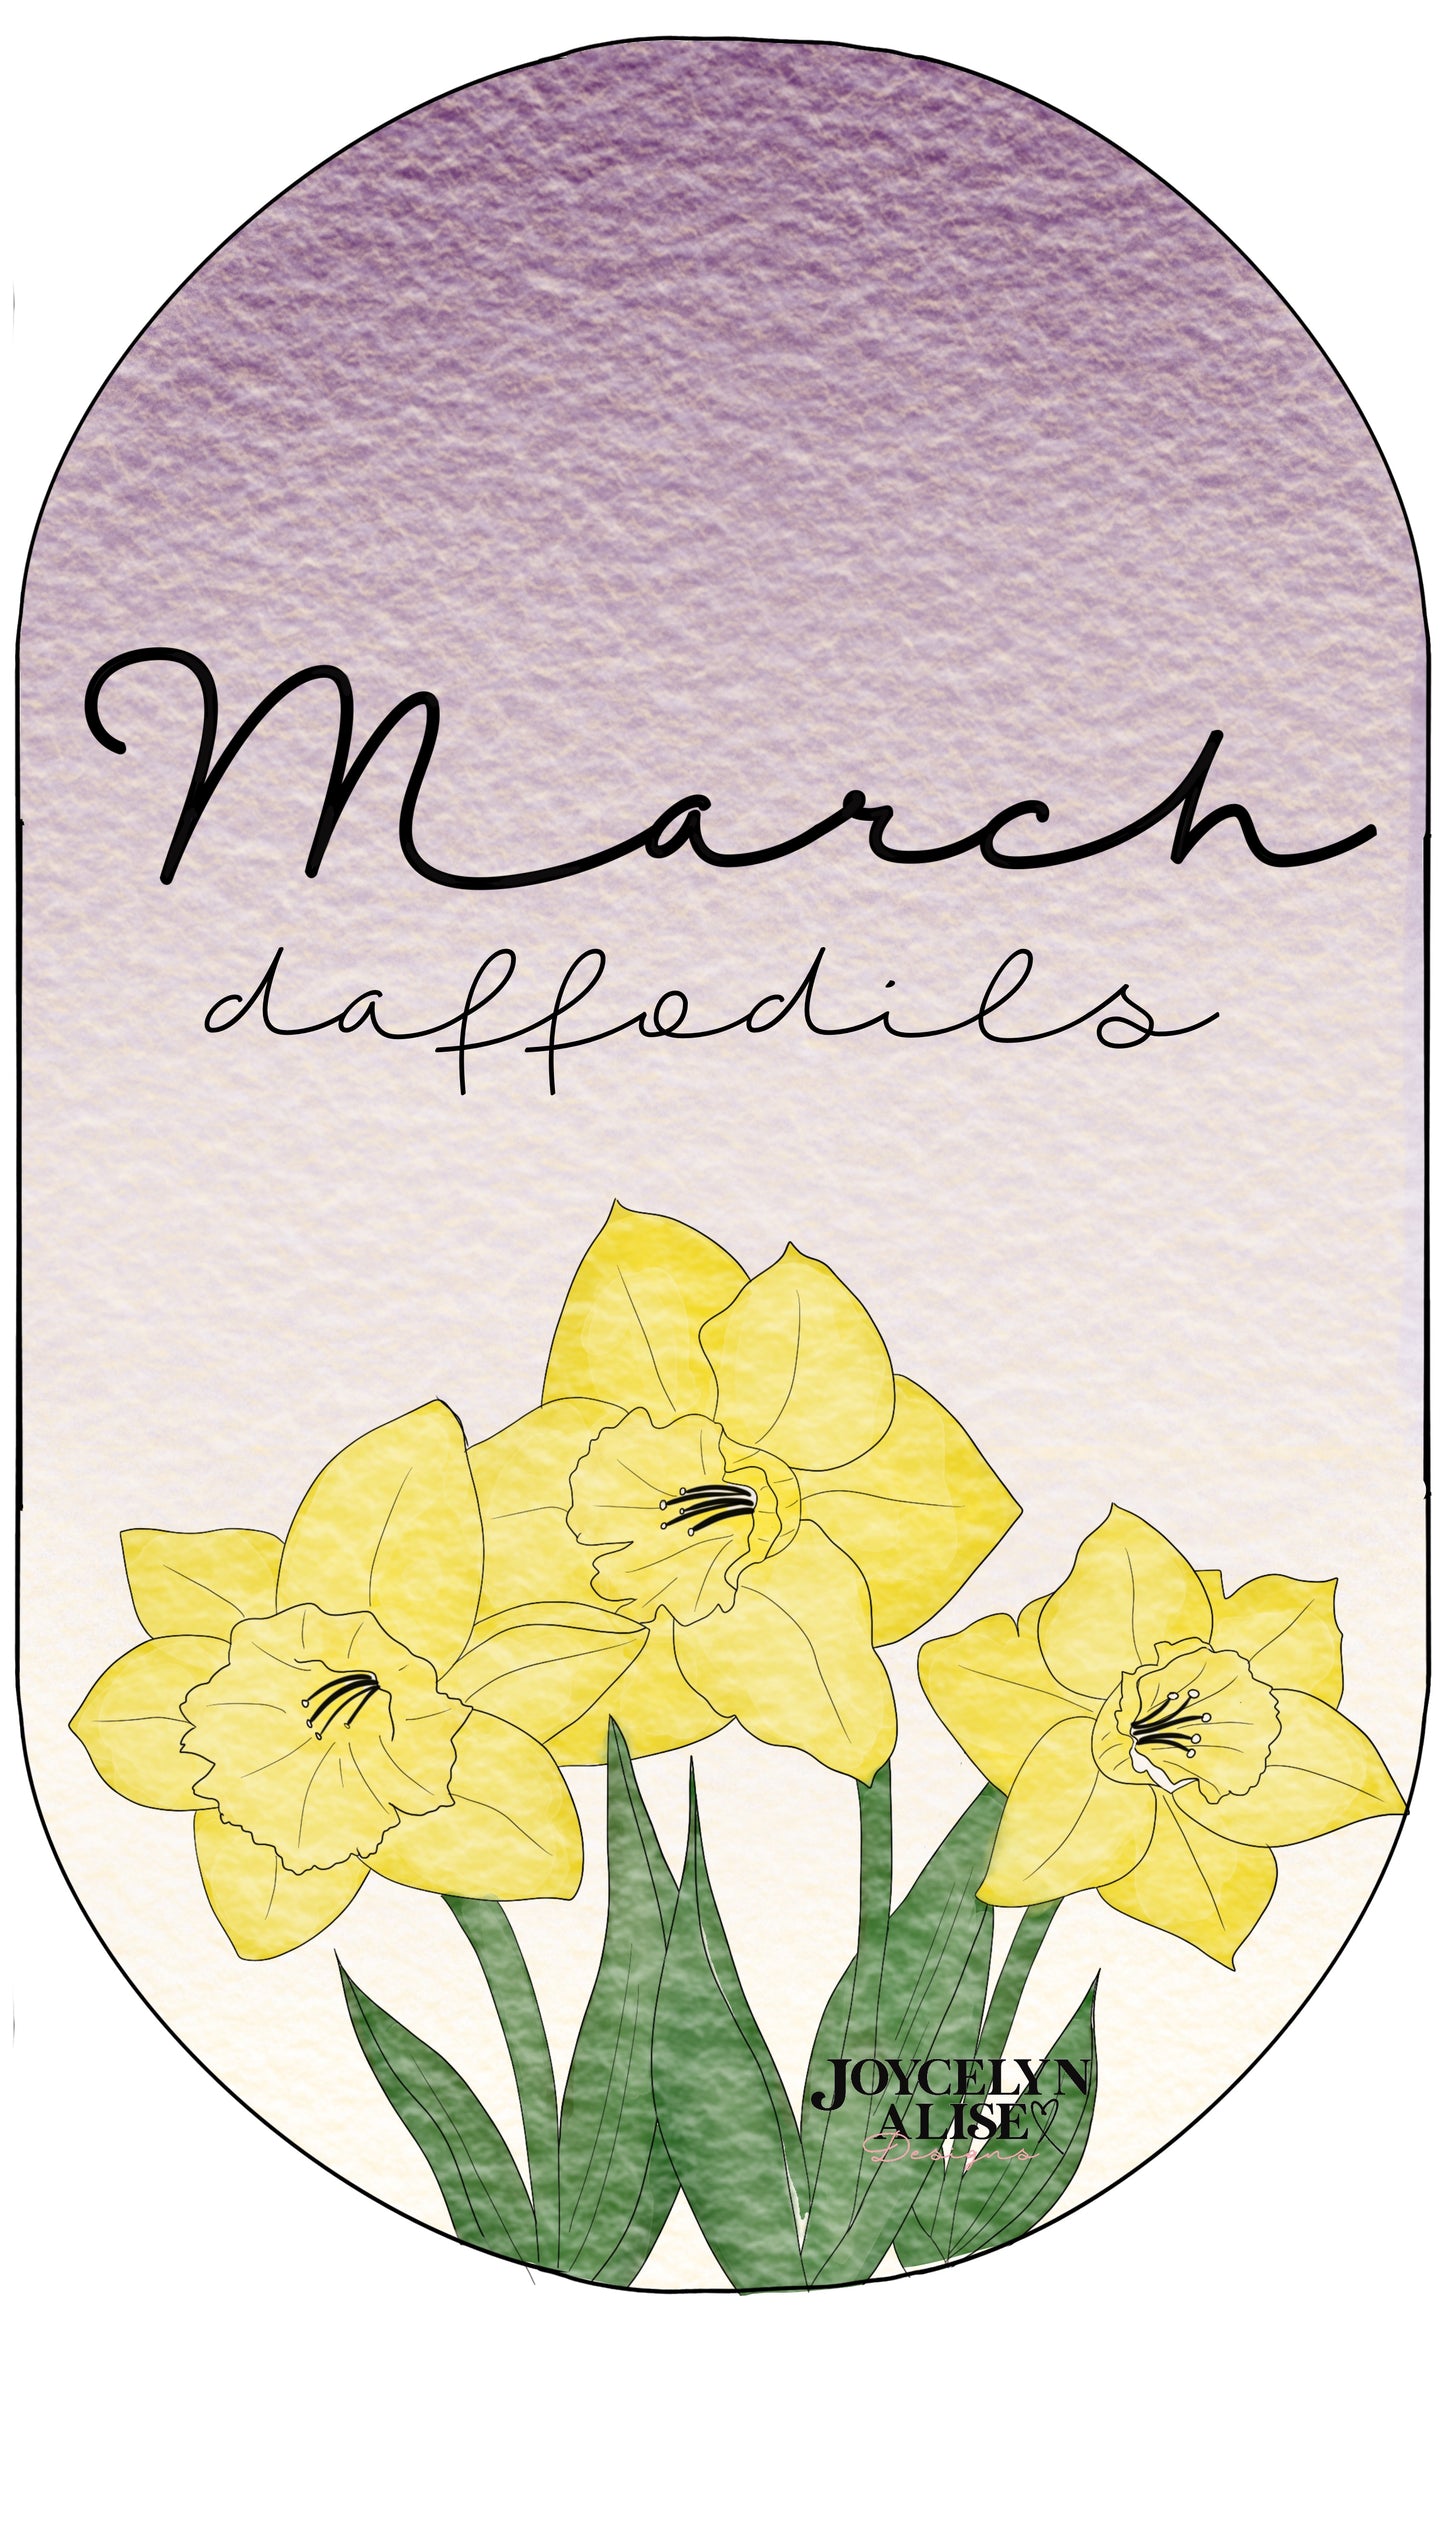 March daffodils scroll saw template